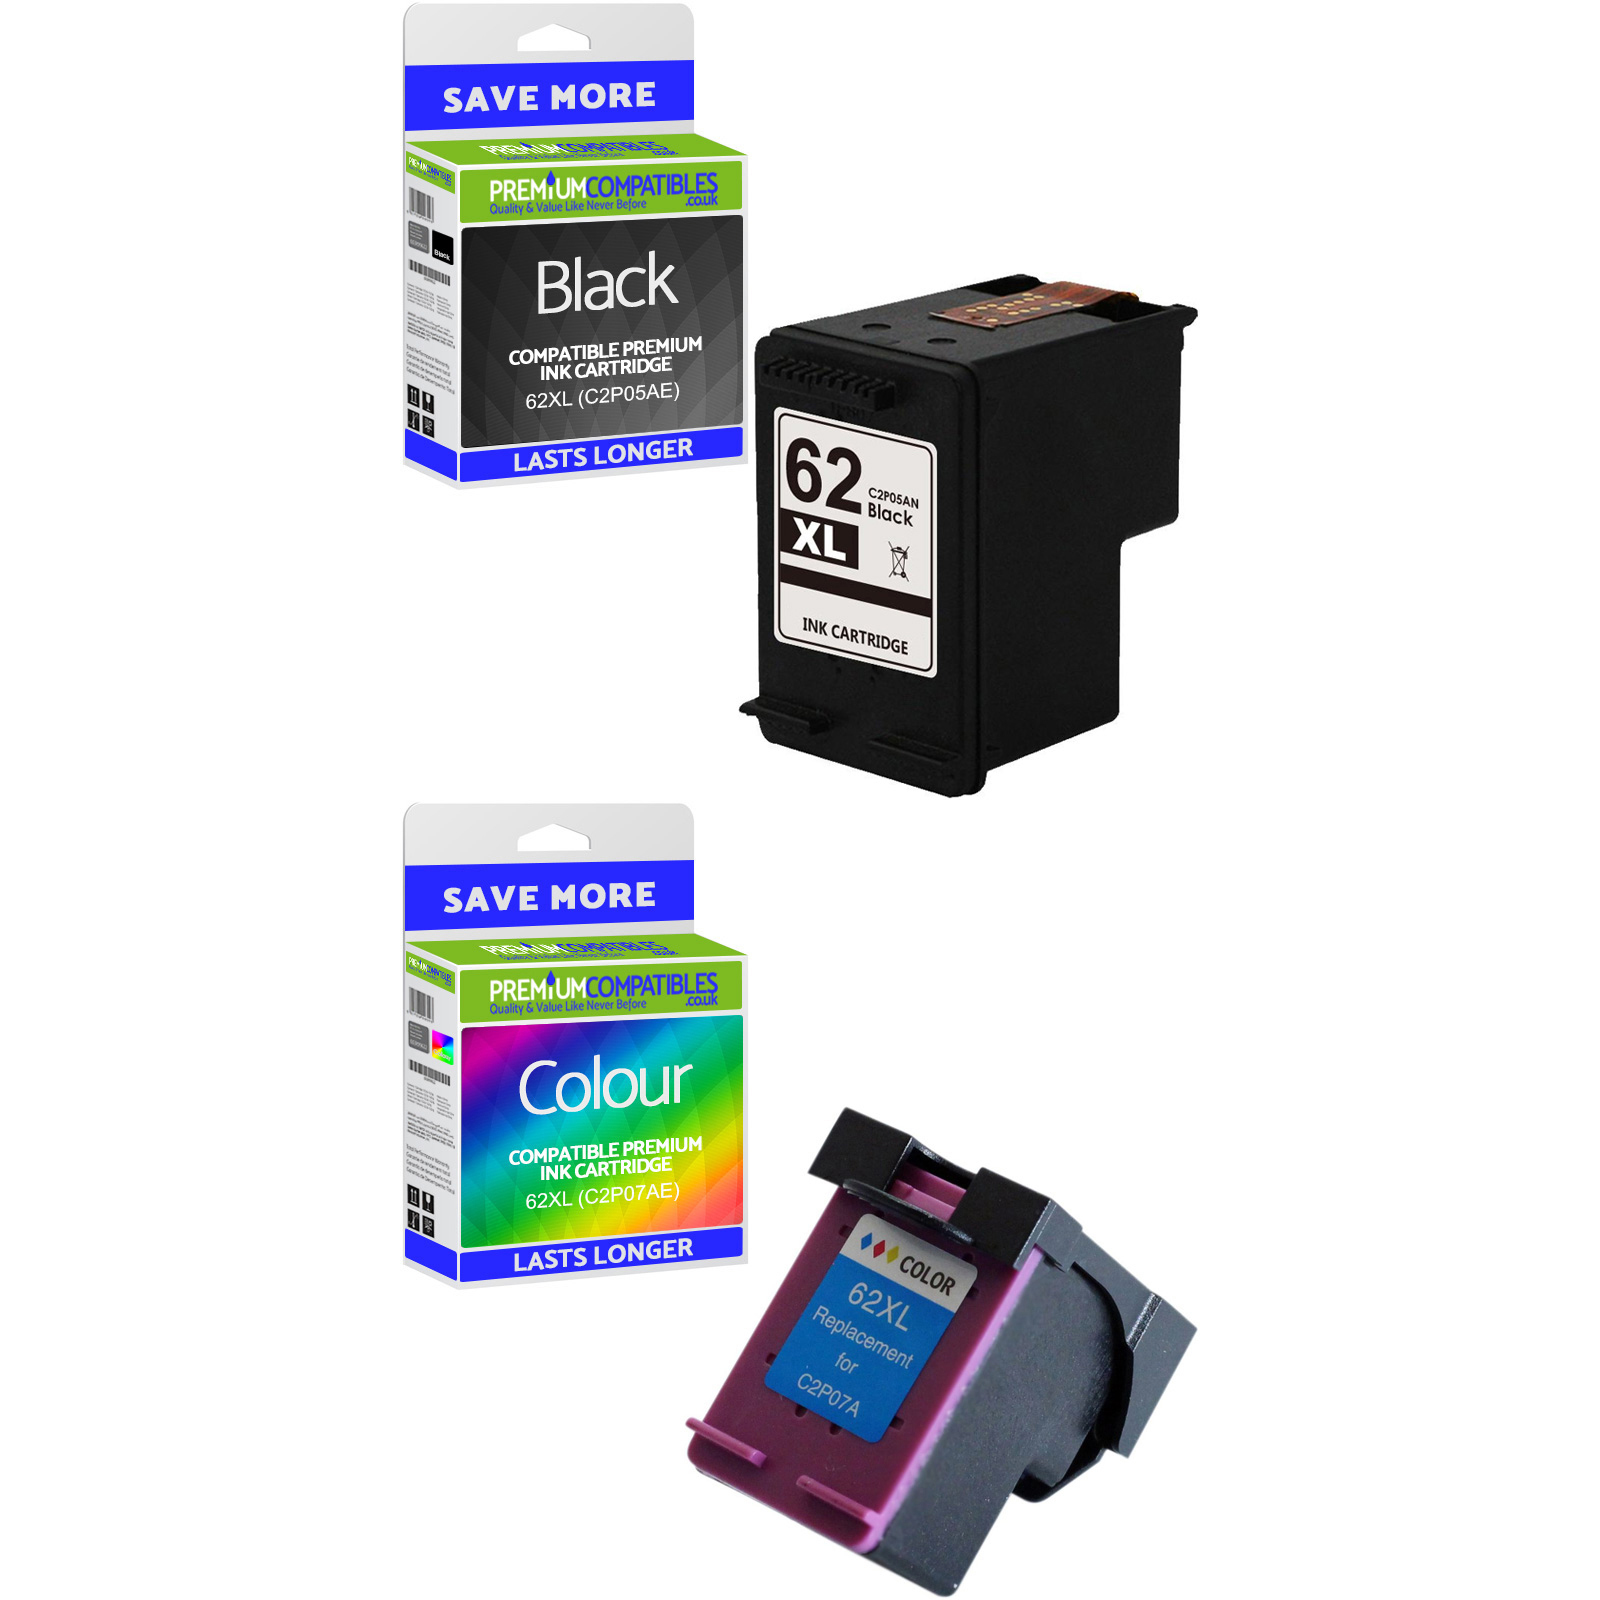 Premium Remanufactured HP 62XL Black & Colour Combo Pack High Capacity Ink Cartridges (C2P05AE & C2P07AE)